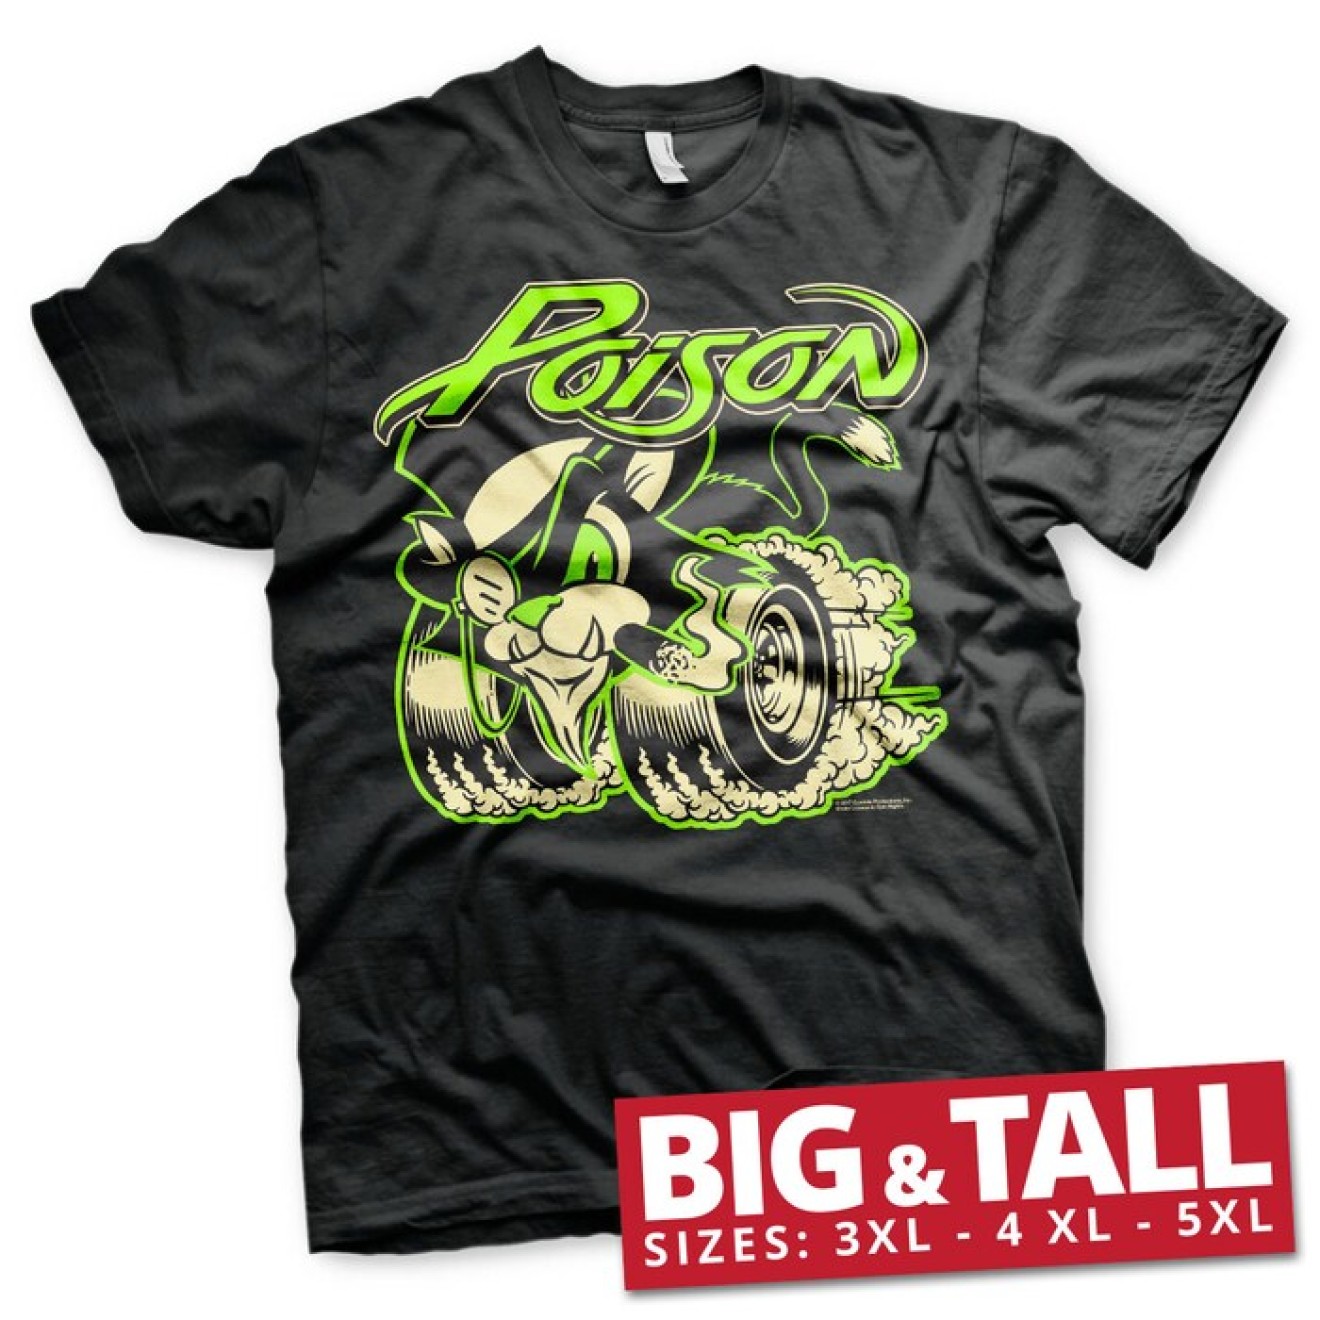 Poison Big & Tall T-Shirt